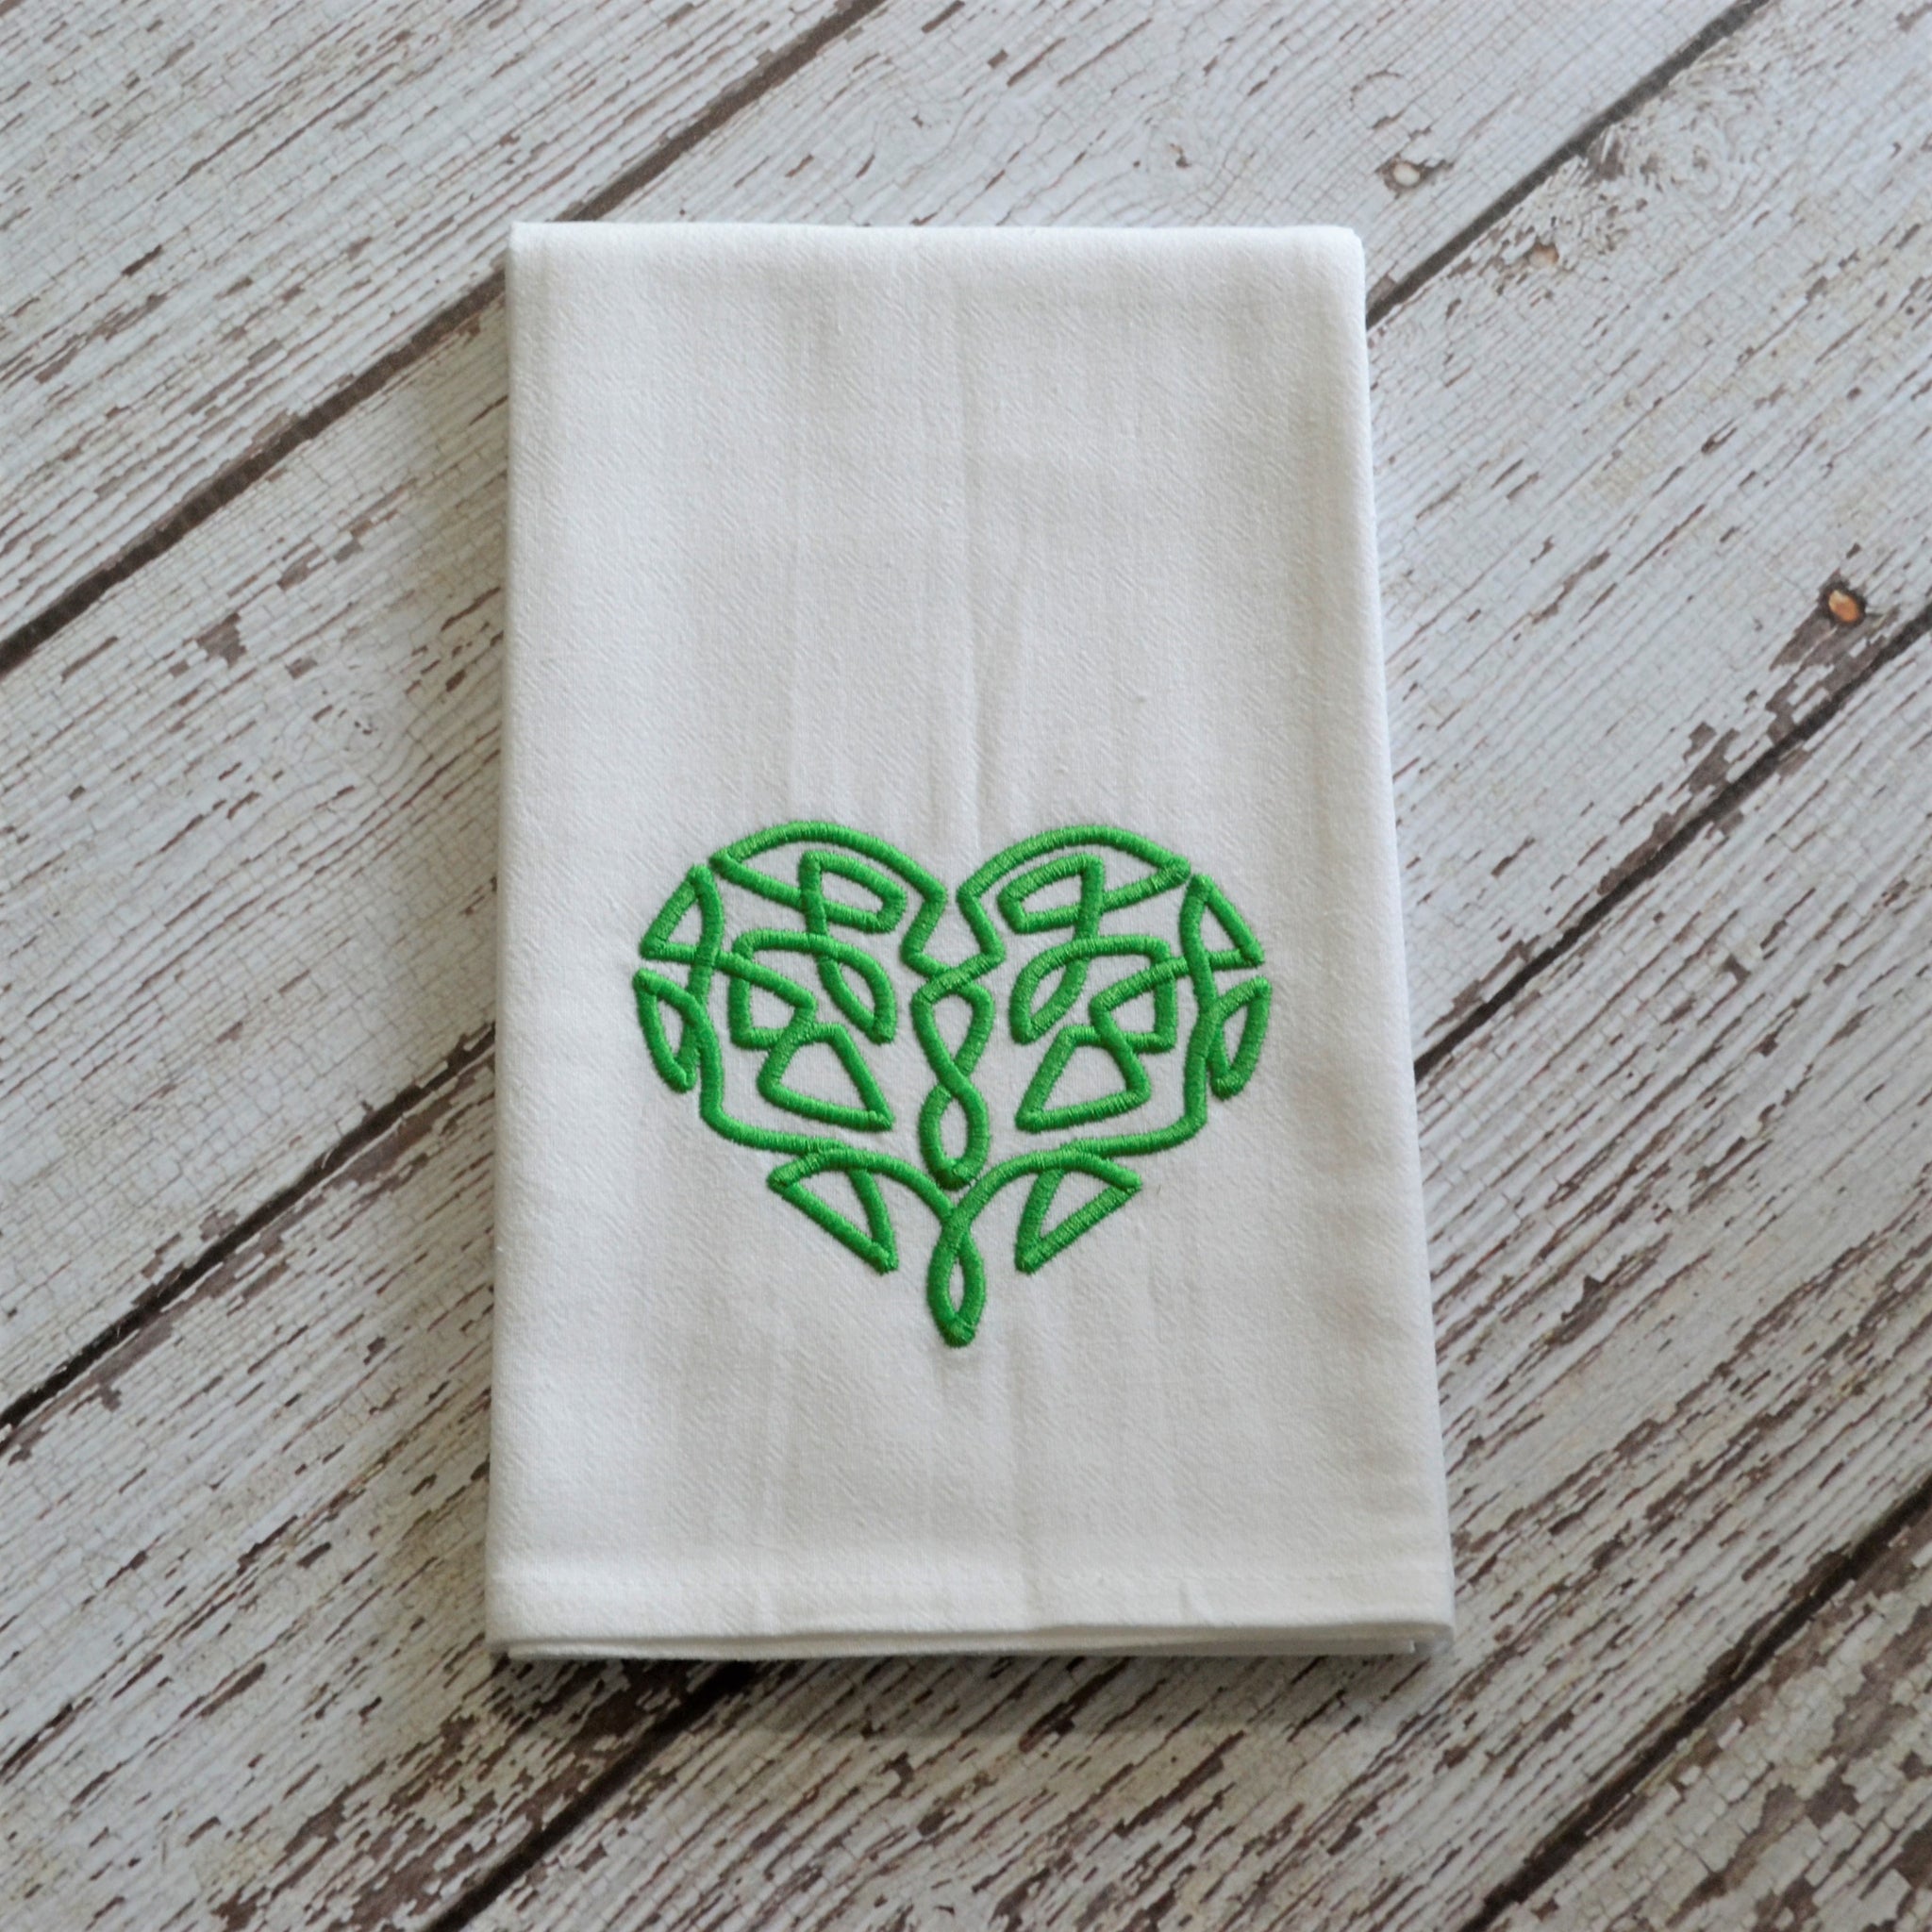 NEW! Celtic Heart Tea Towel